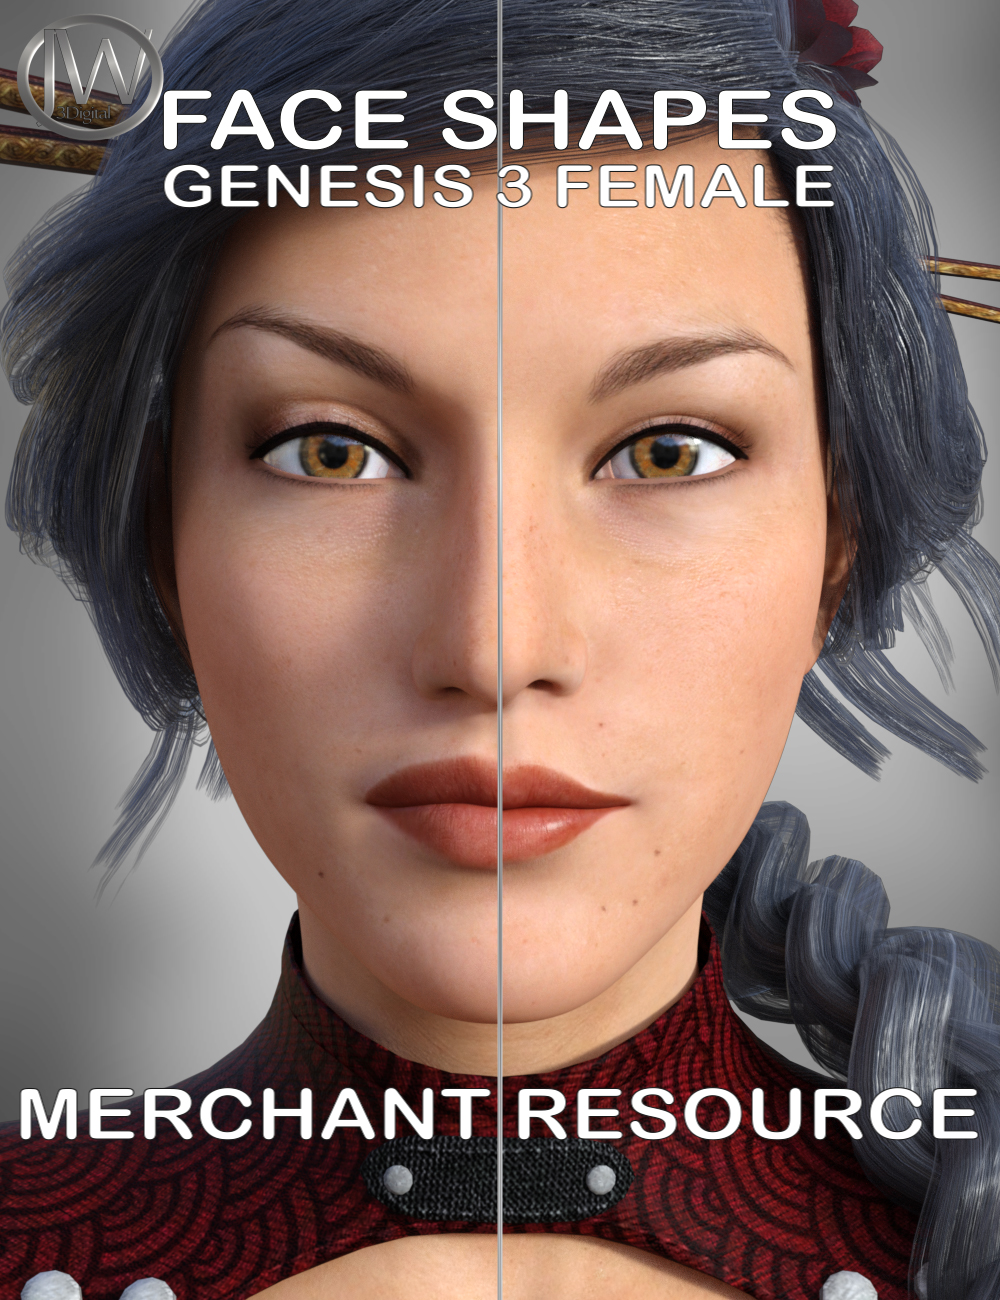 Face Shape Merchant Resource for Genesis 3 Female by: JWolf, 3D Models by Daz 3D